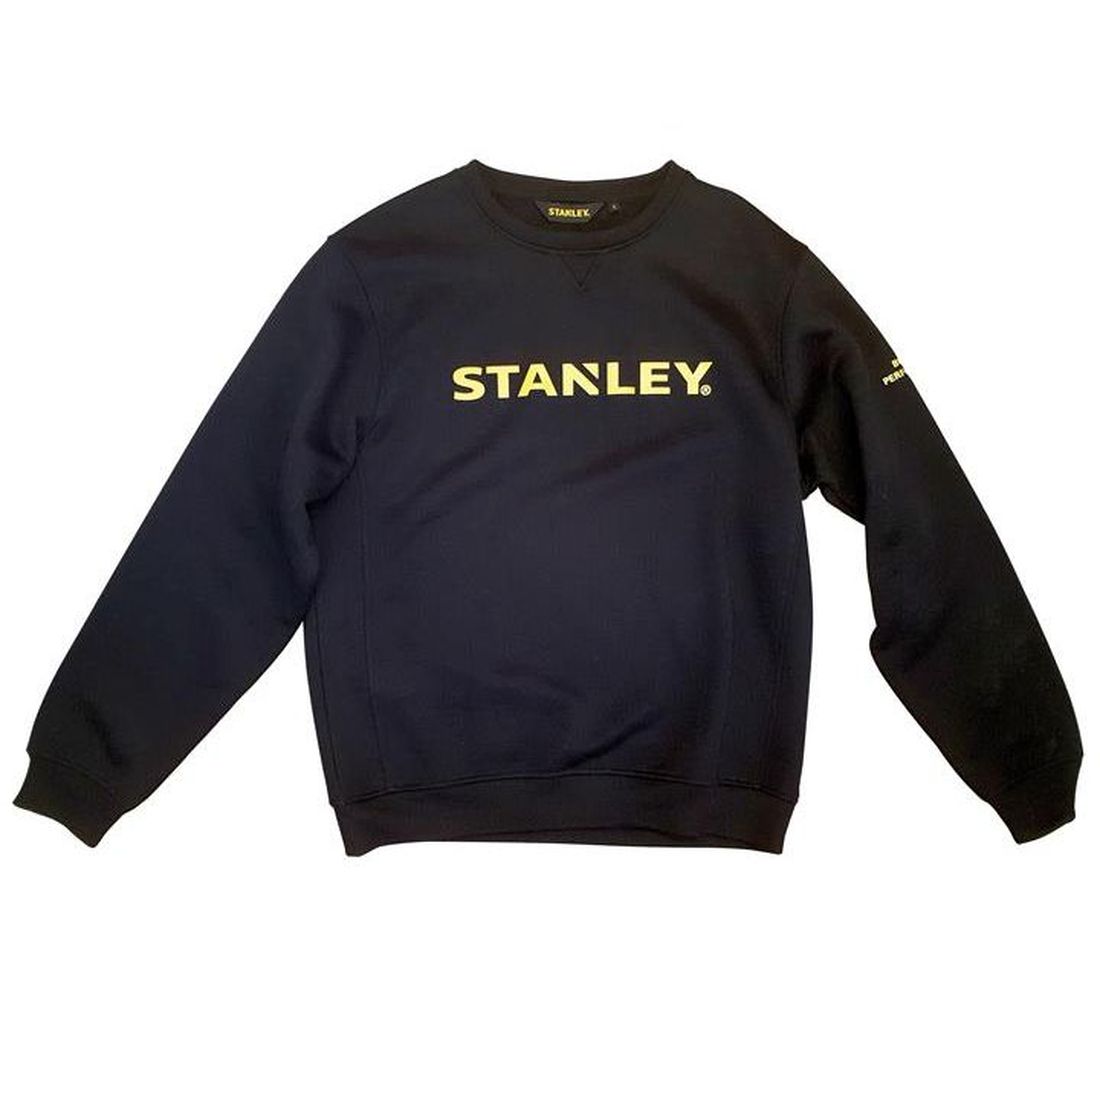 STANLEY Jackson Sweatshirt - XL           